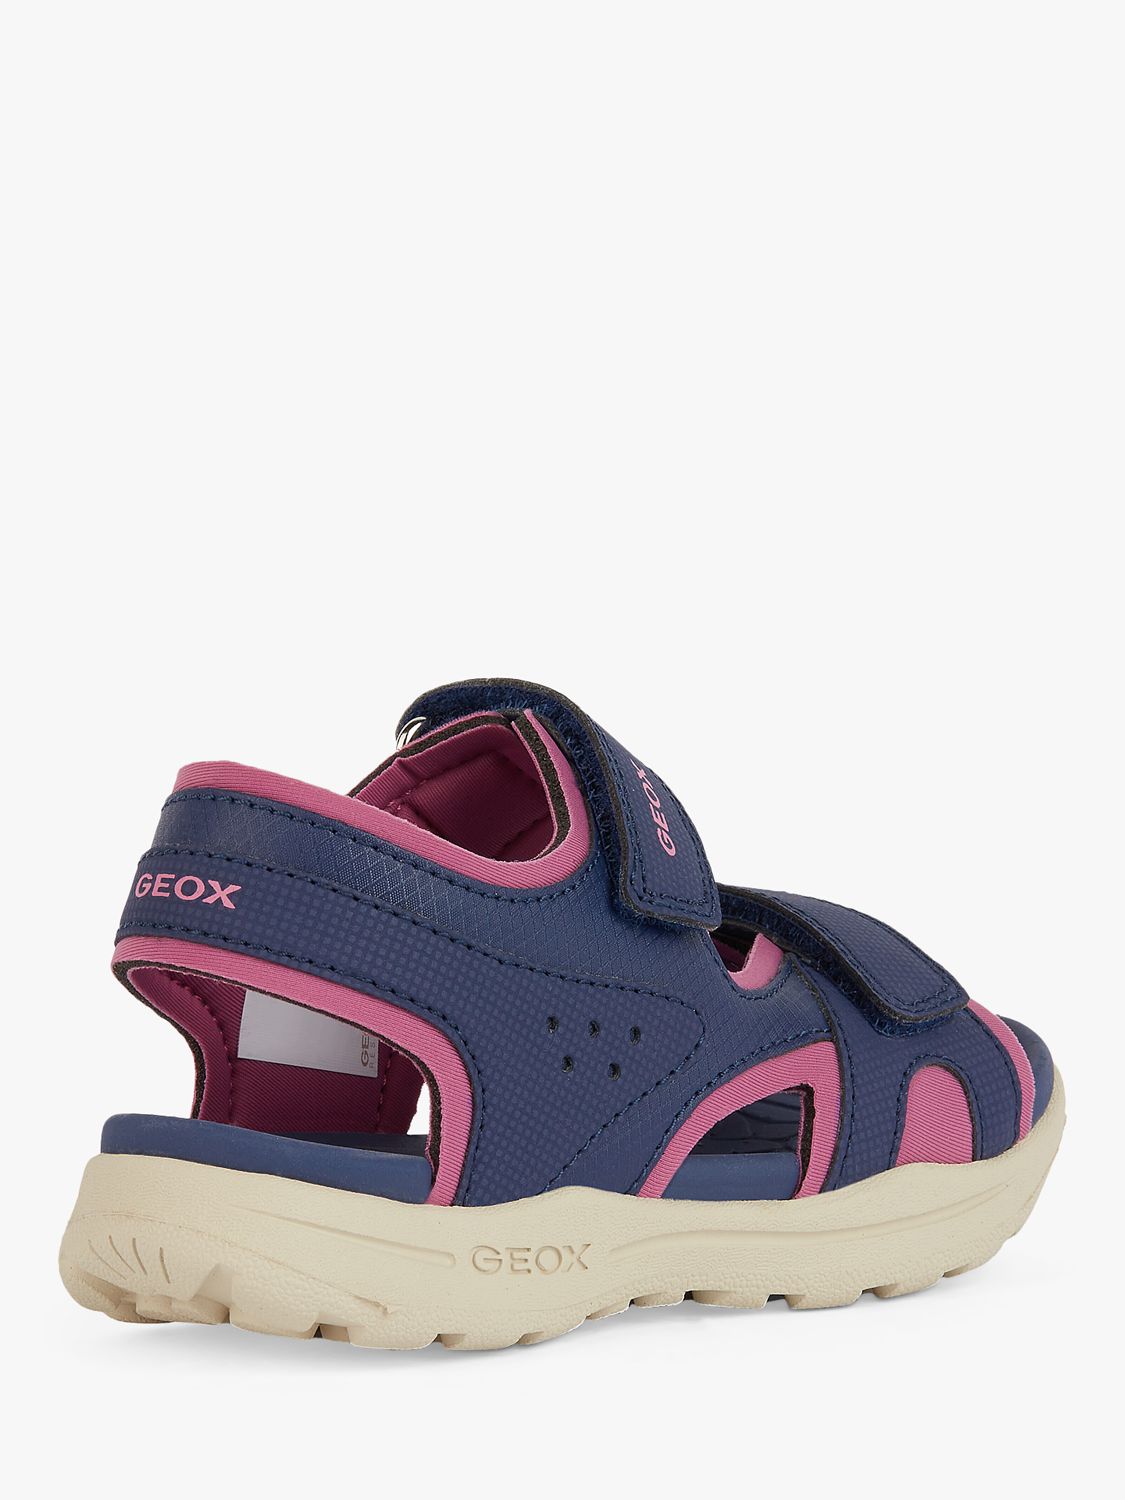 Geox Kids' Vaniett Sandals, Navy/Fuchsia, 30